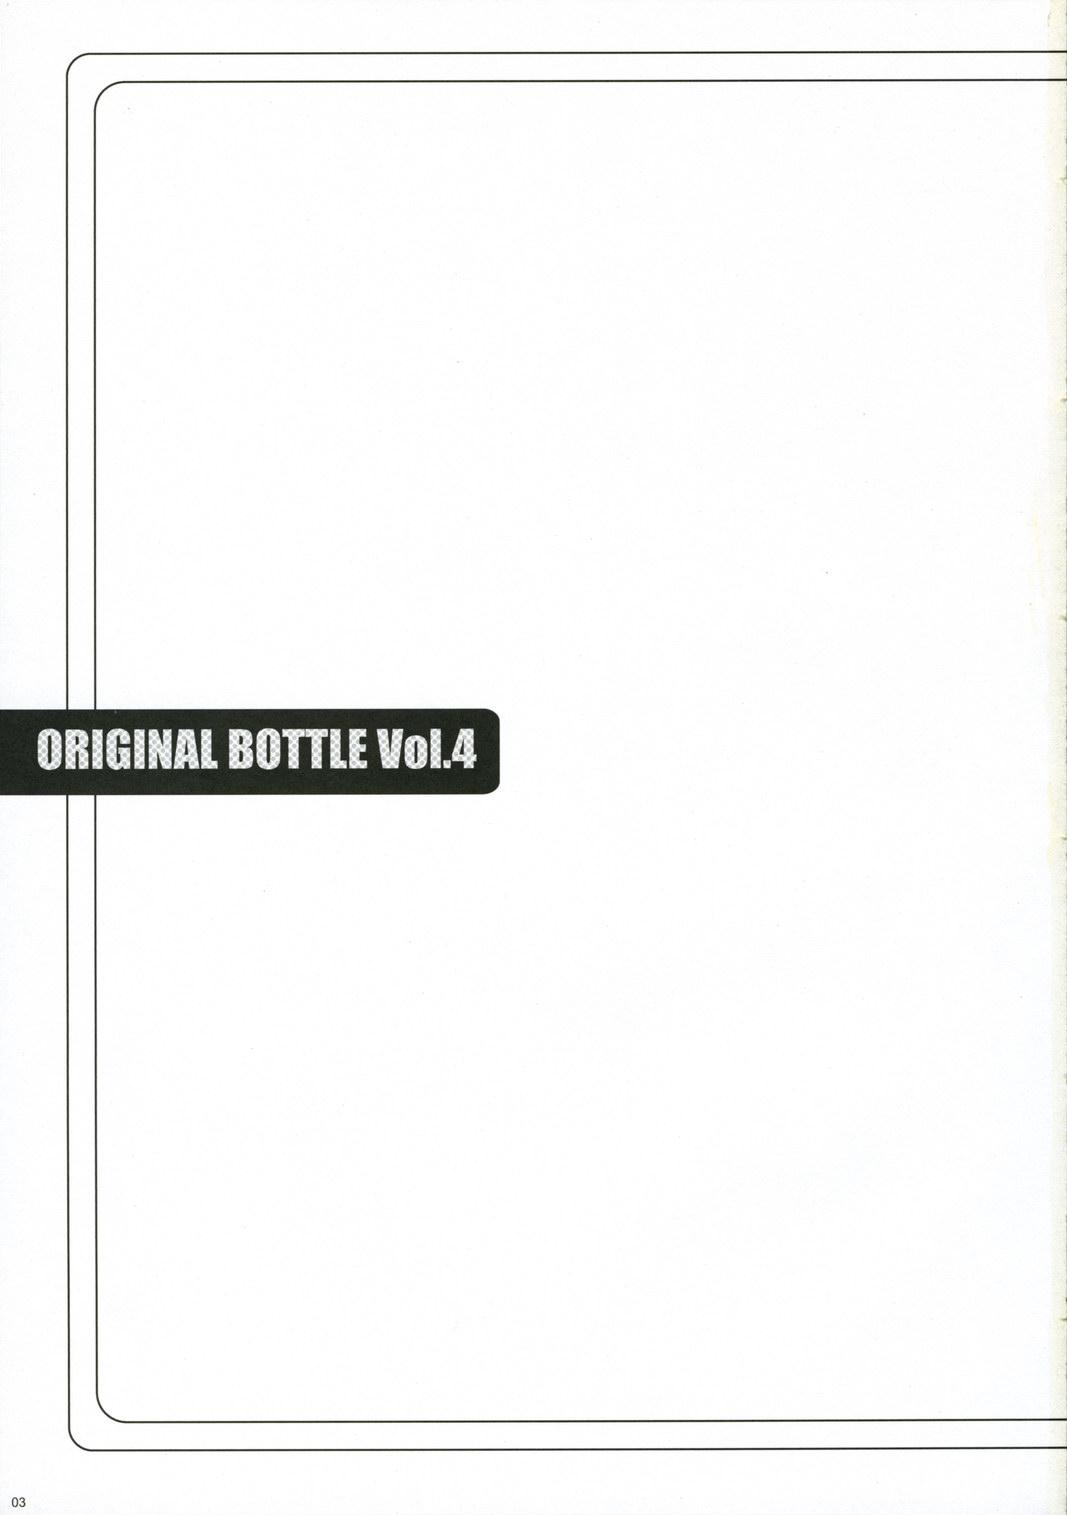 Original Bottle Vol. 4 1